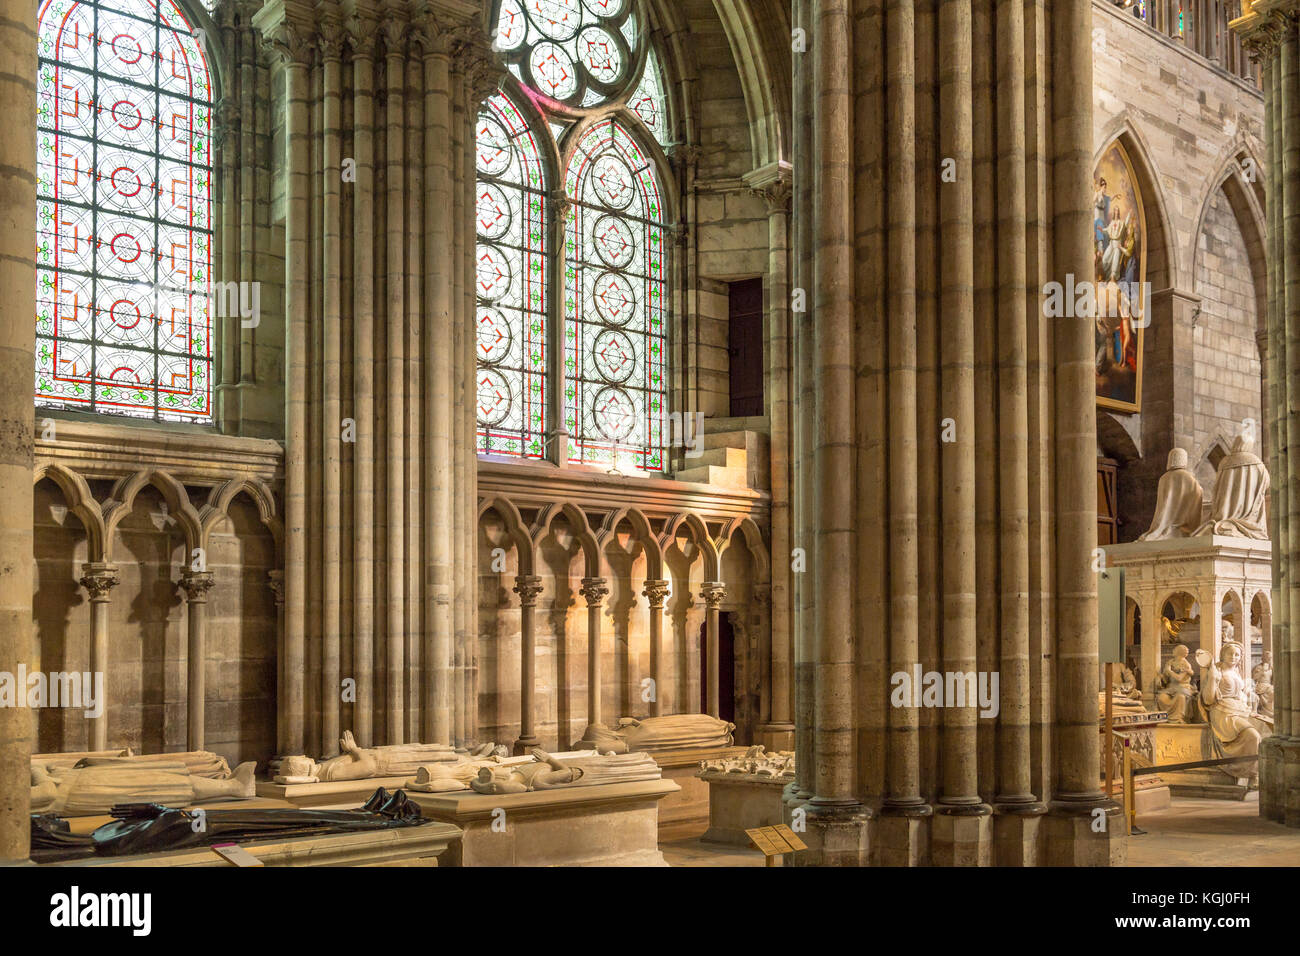 Interior of Saint-Denis Basilica, Paris, France. Stock Photo